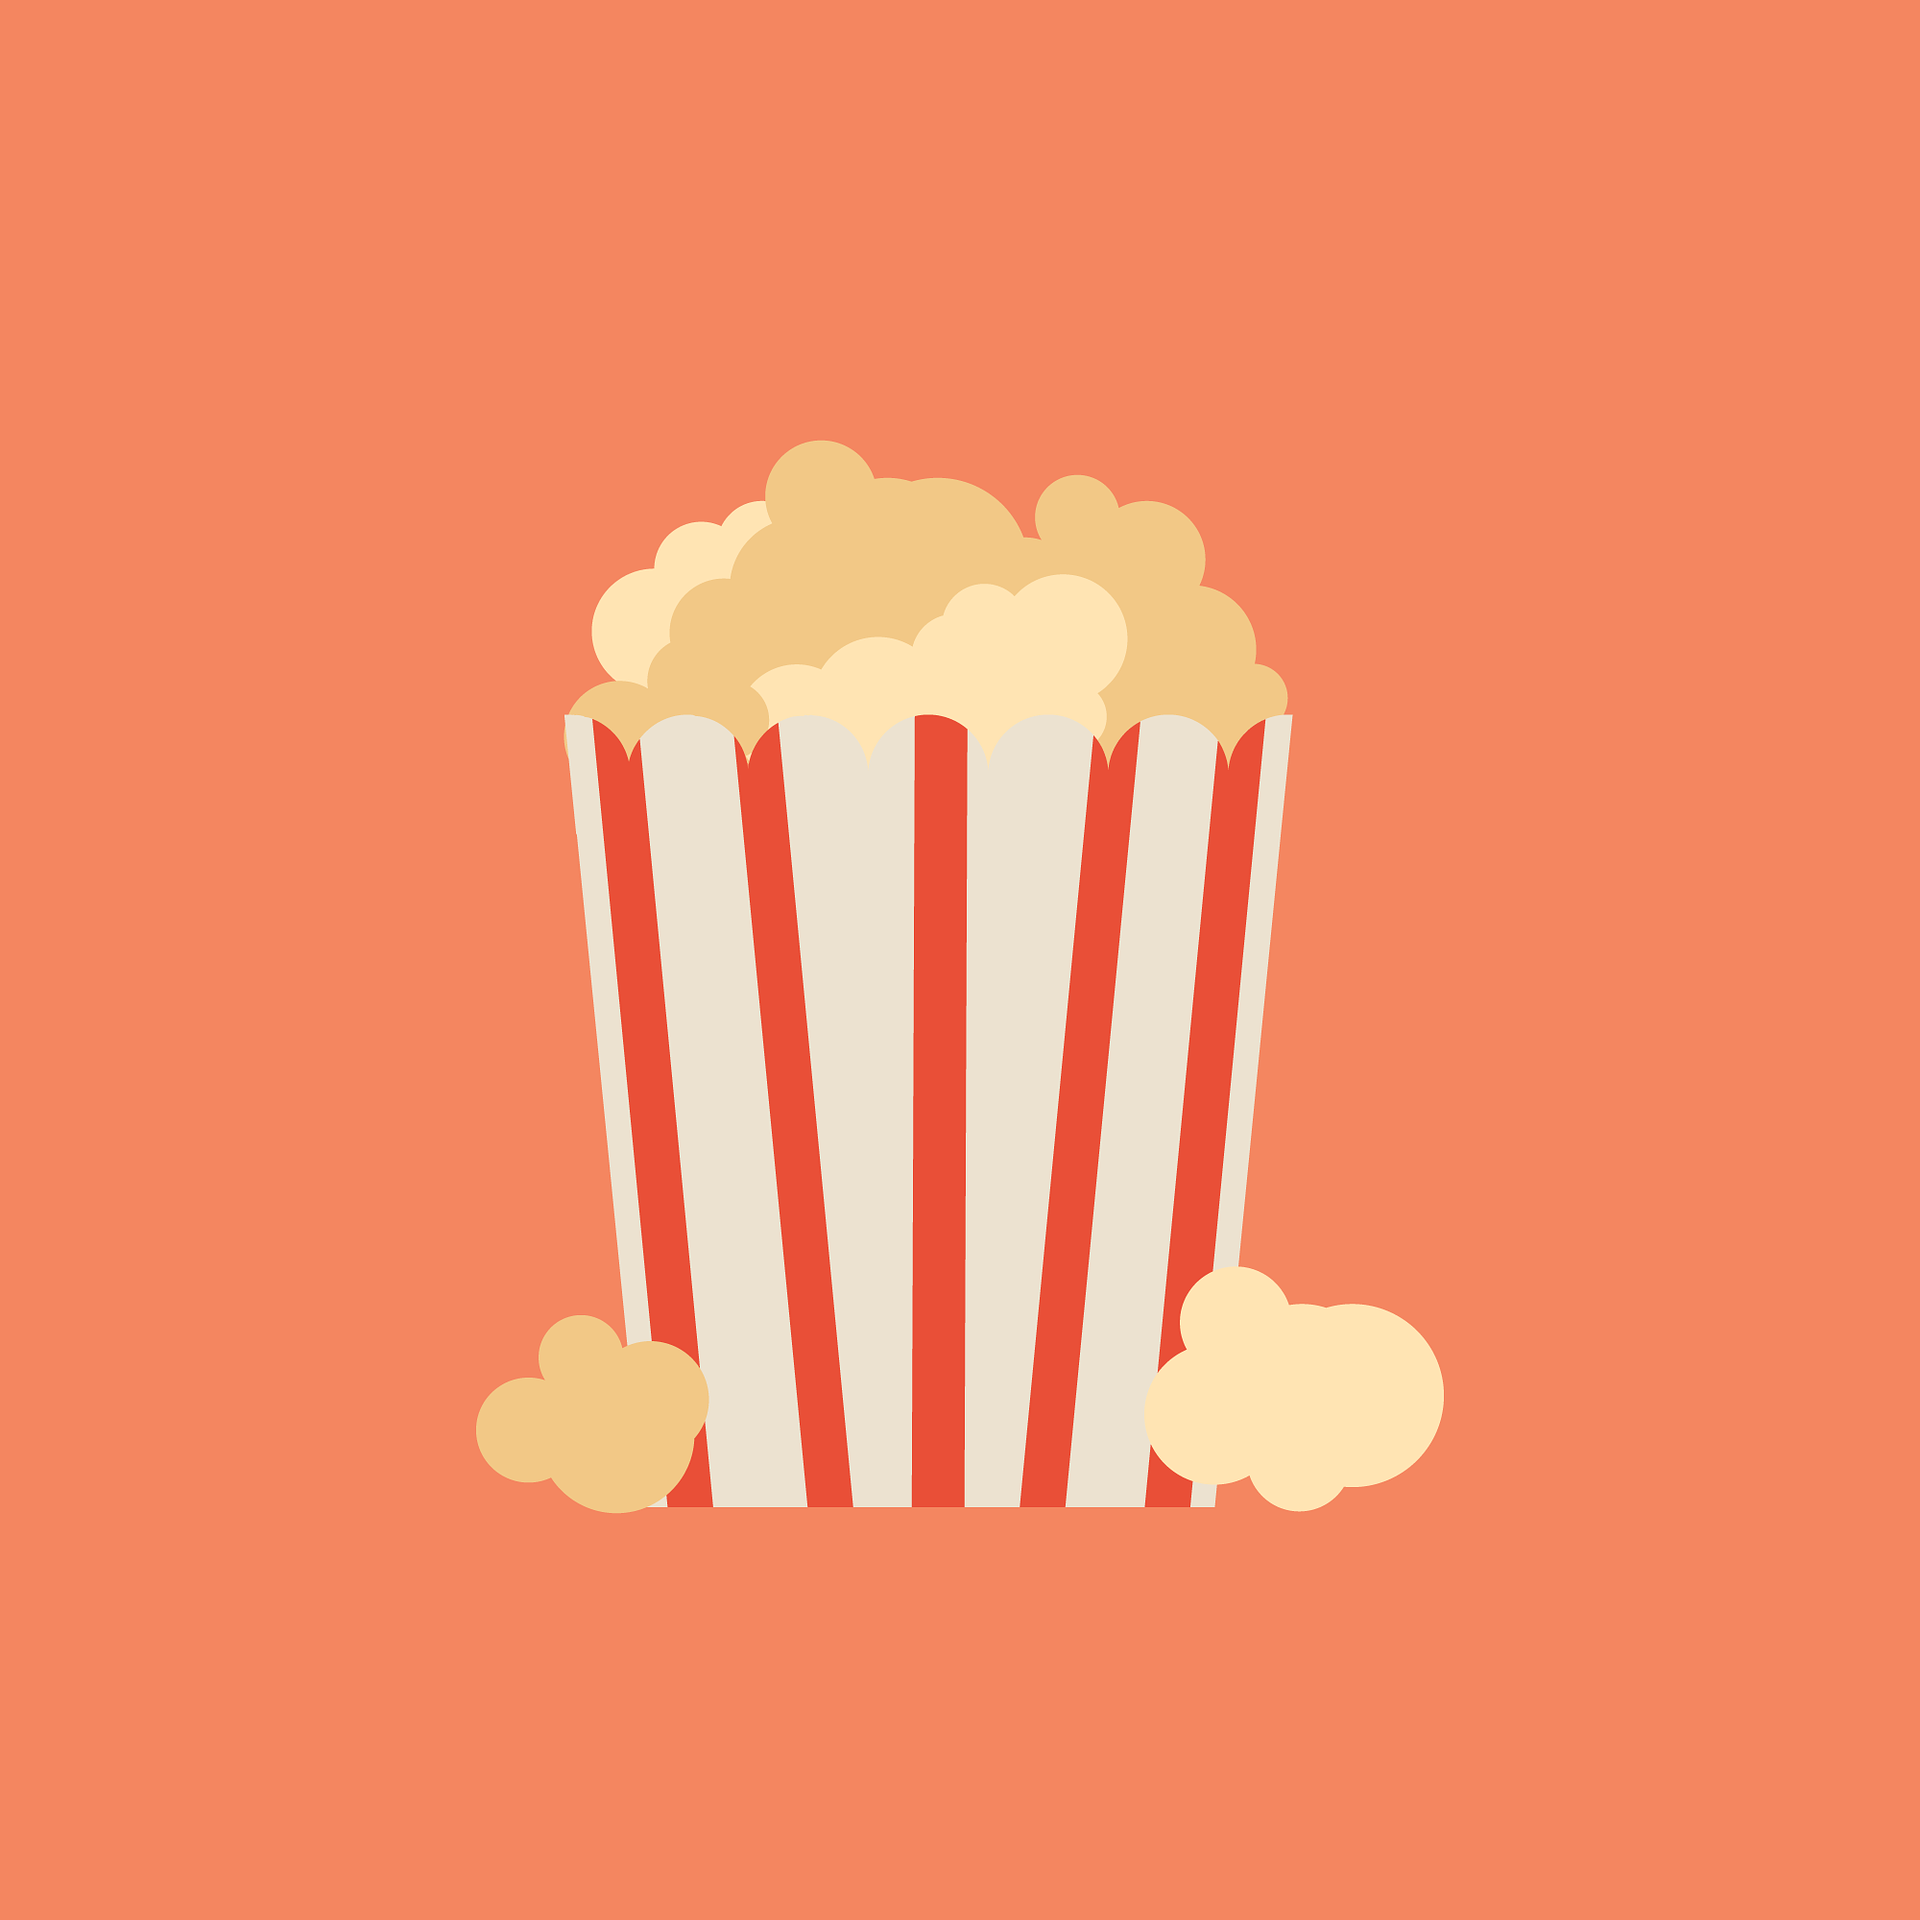 Popcorn illustration